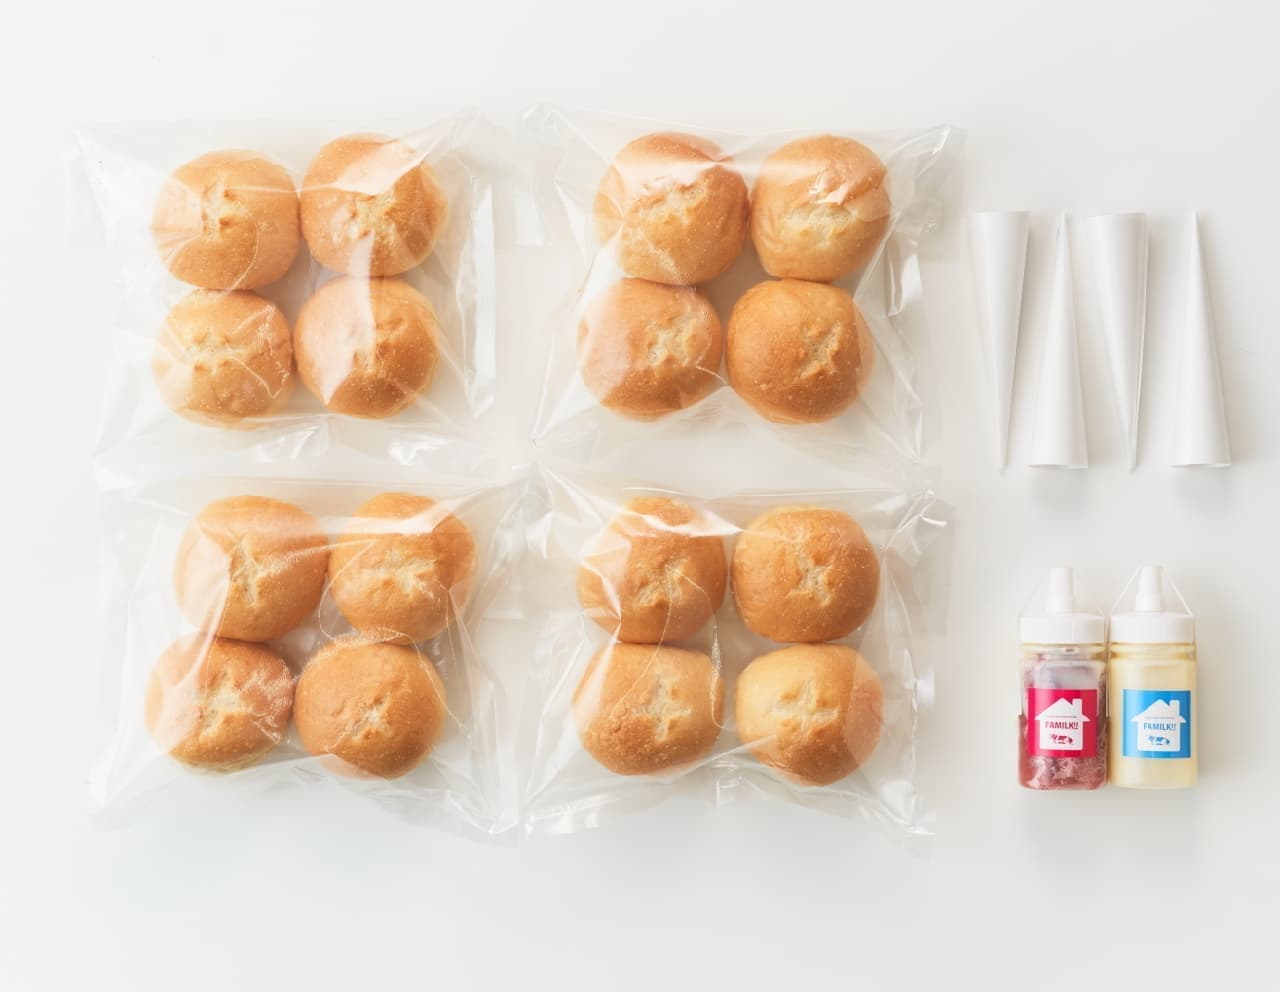 Familk "Freshly baked milk bread kit at home [Limited Amaou taste]"